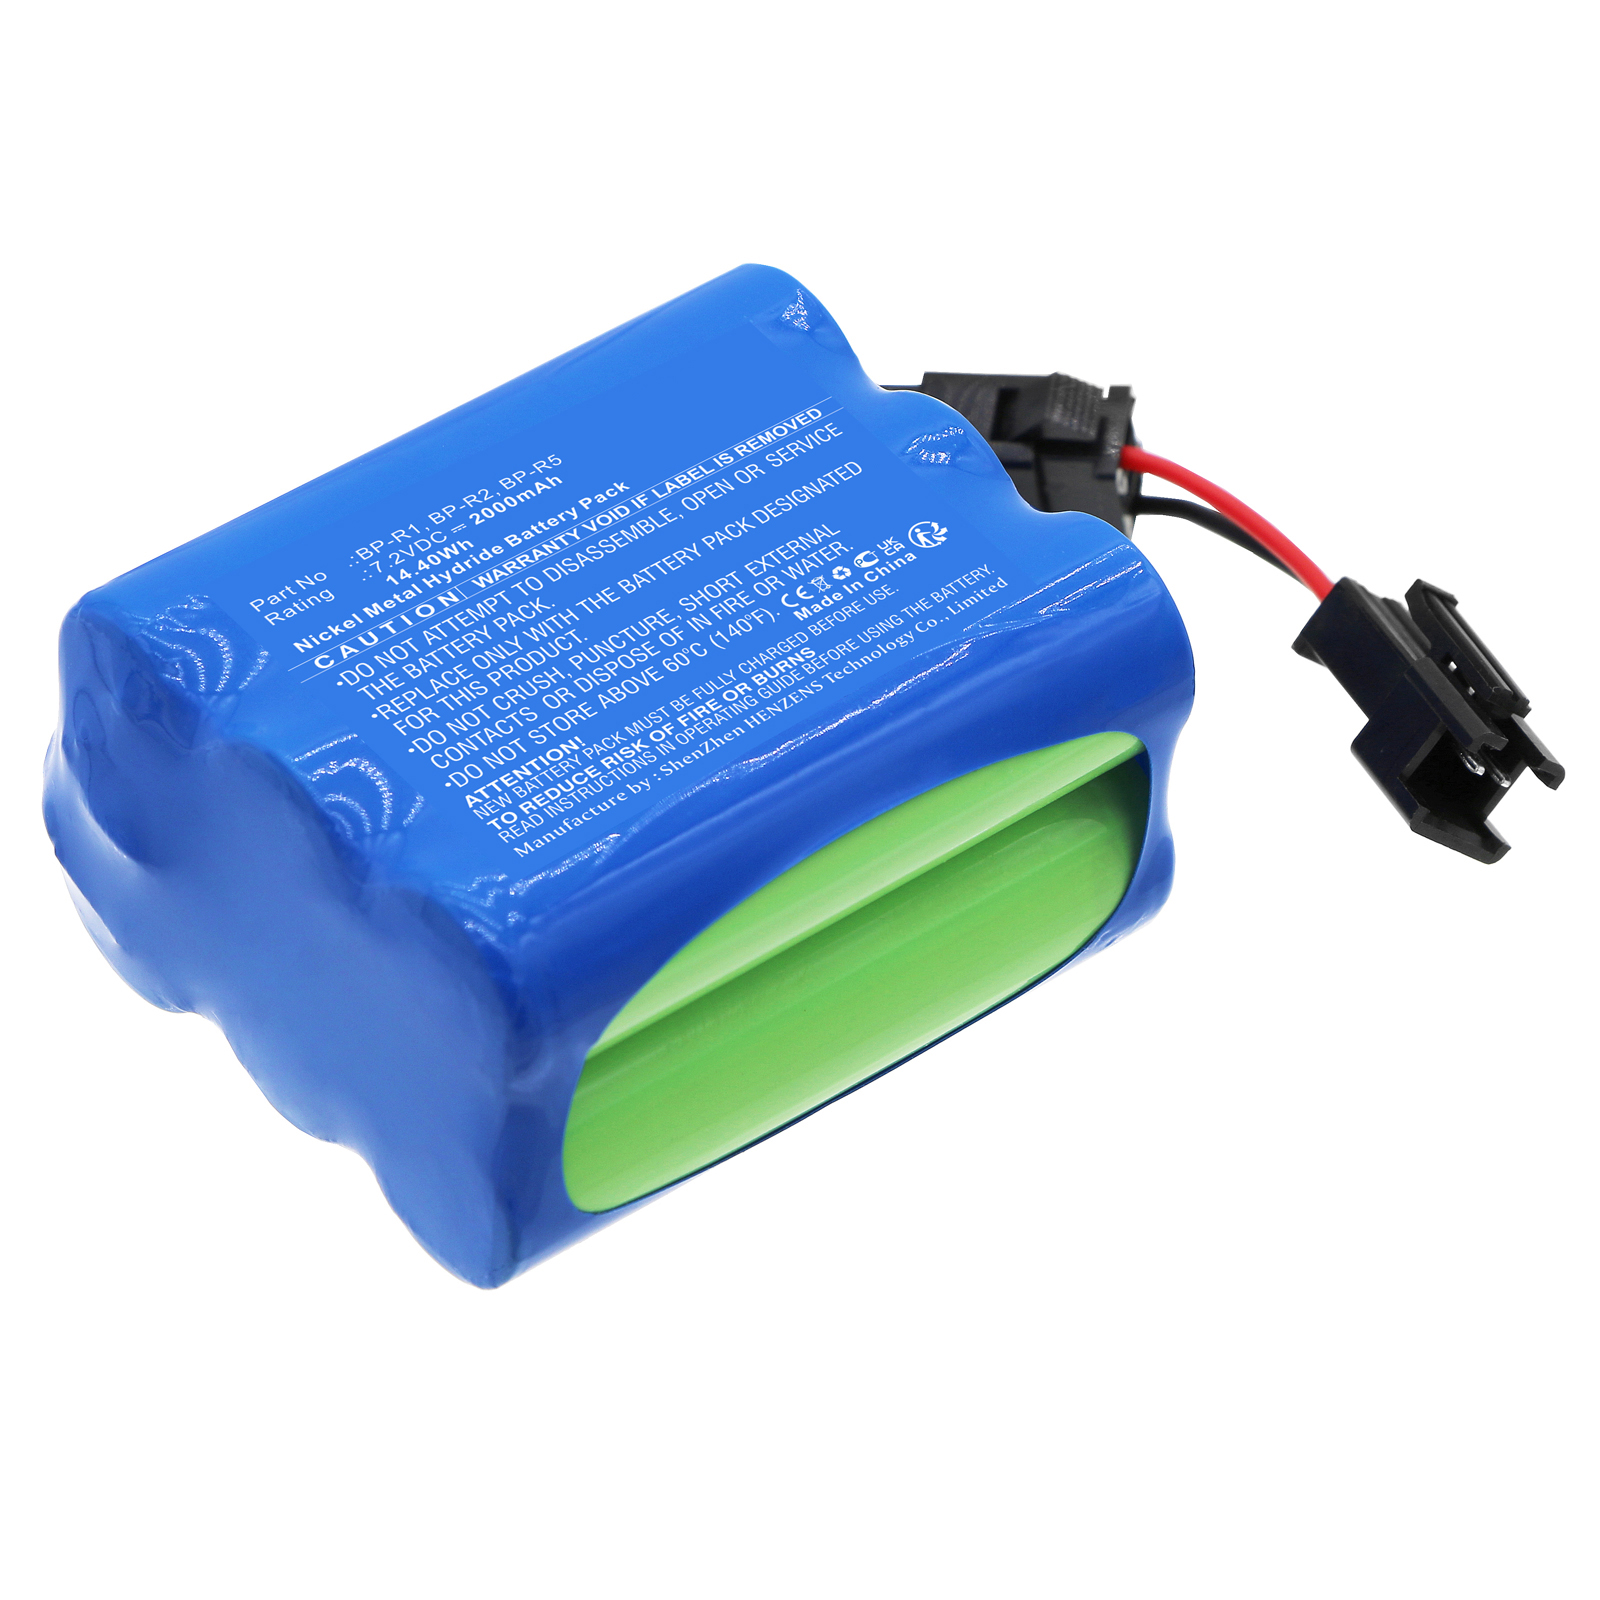 Batteries for TivoliDAB Digital